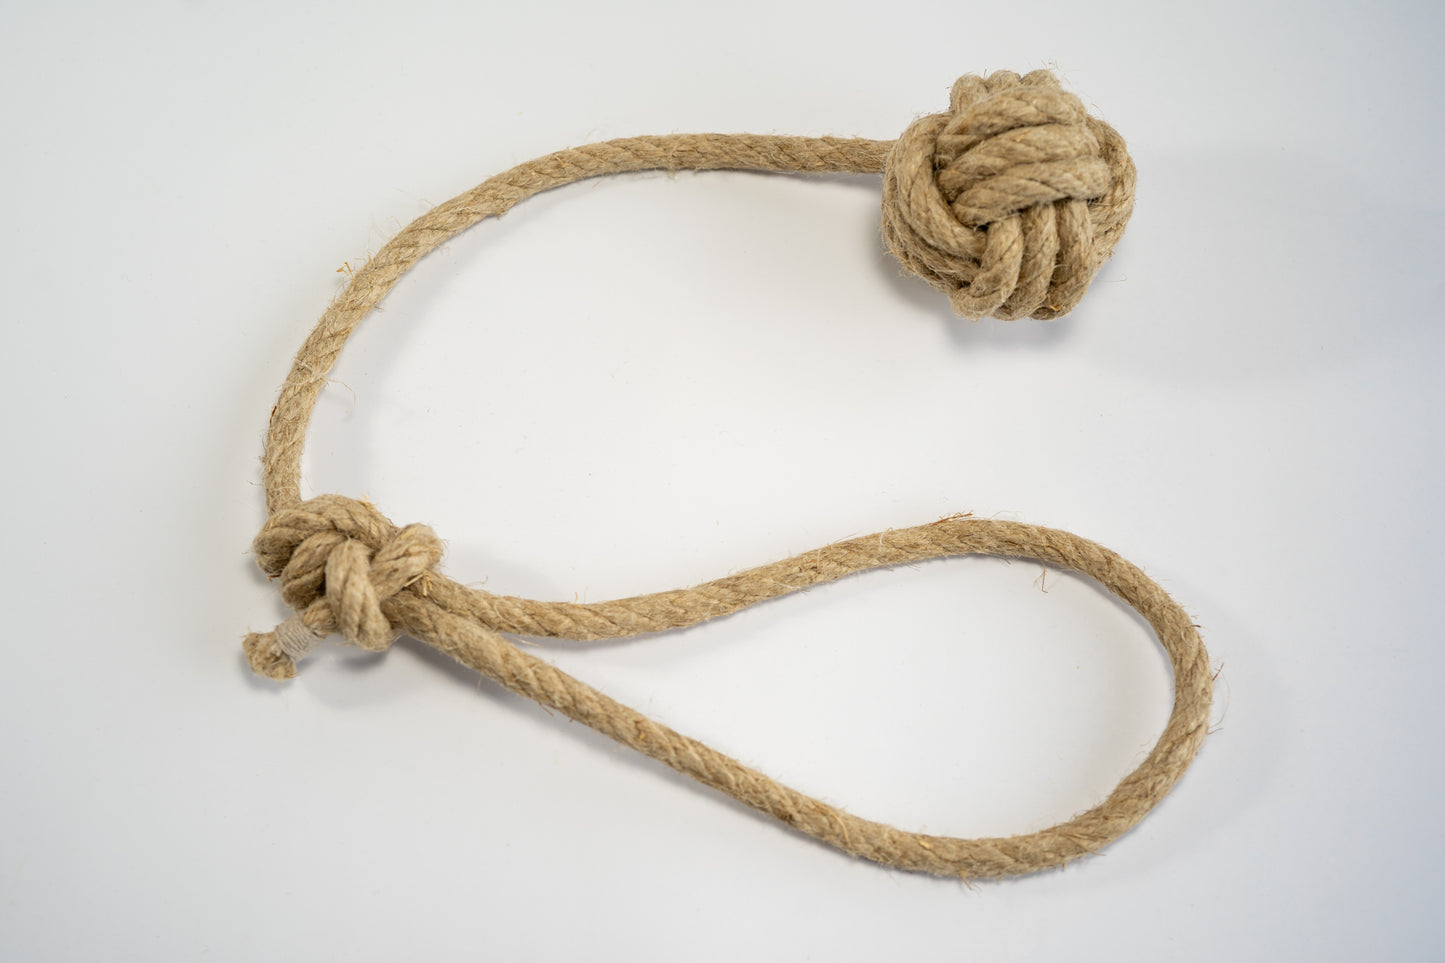 Hemp rope with medium monkey fist for dogs.